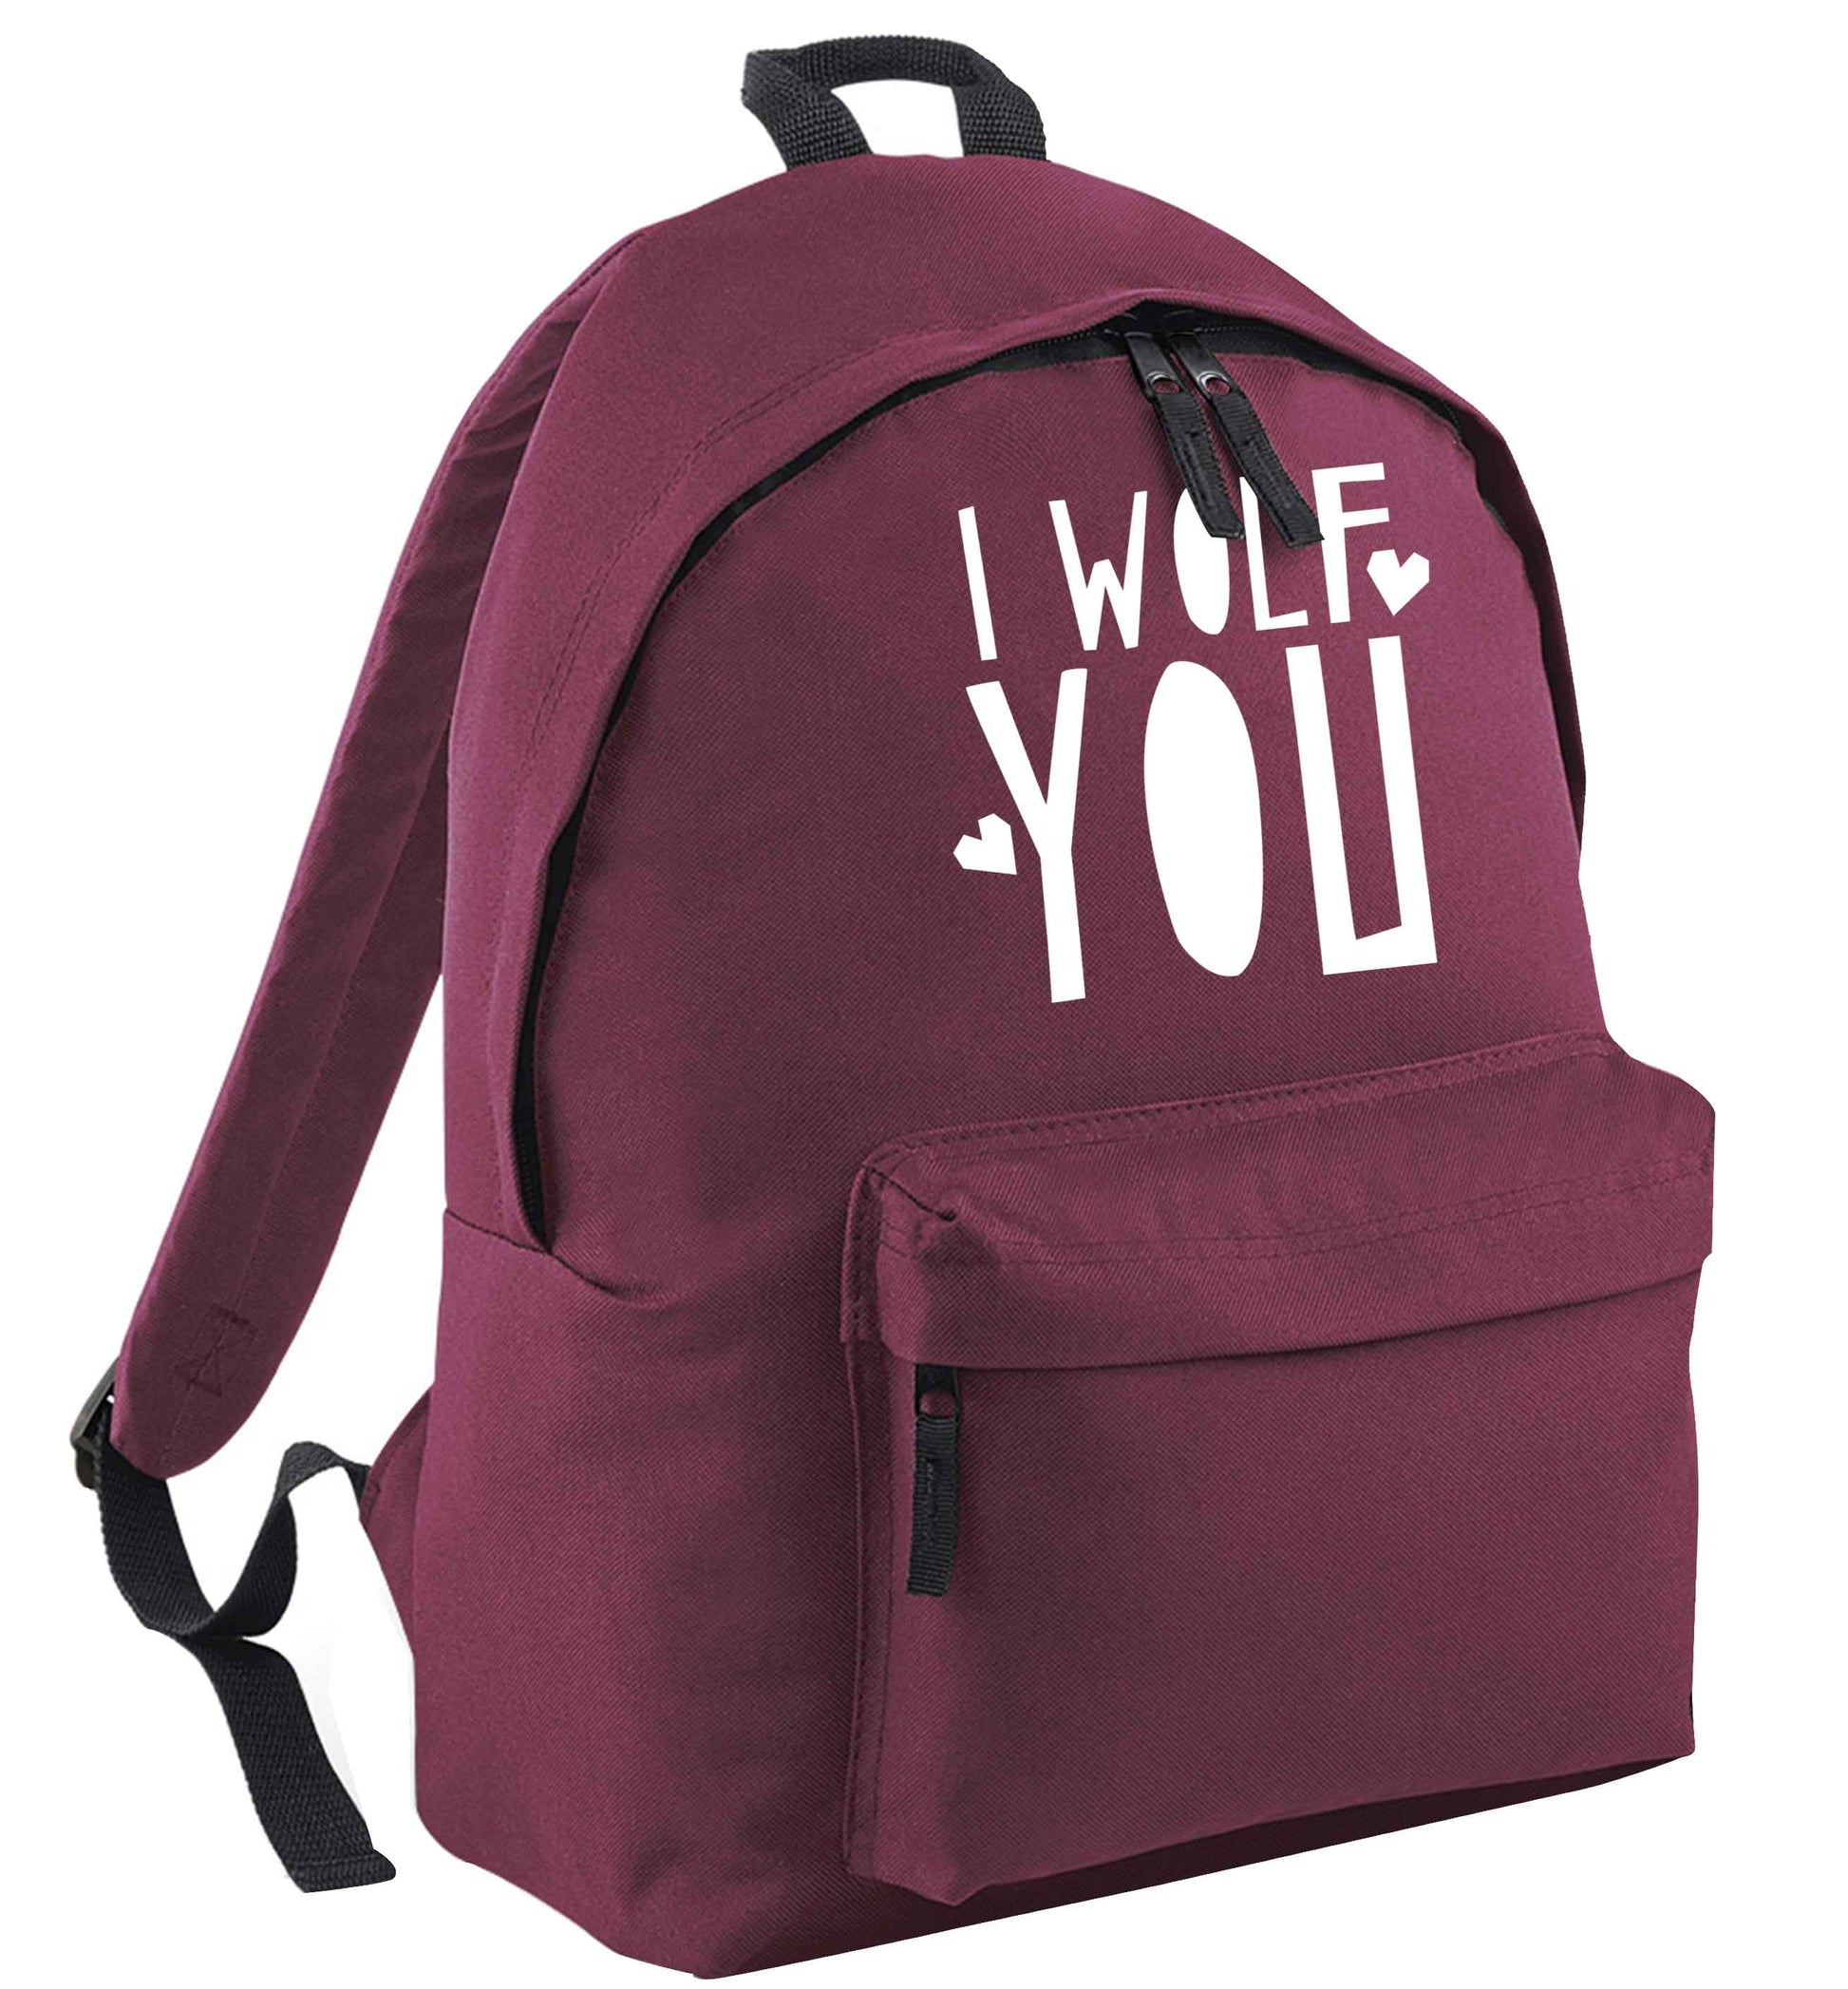 I wolf you maroon adults backpack